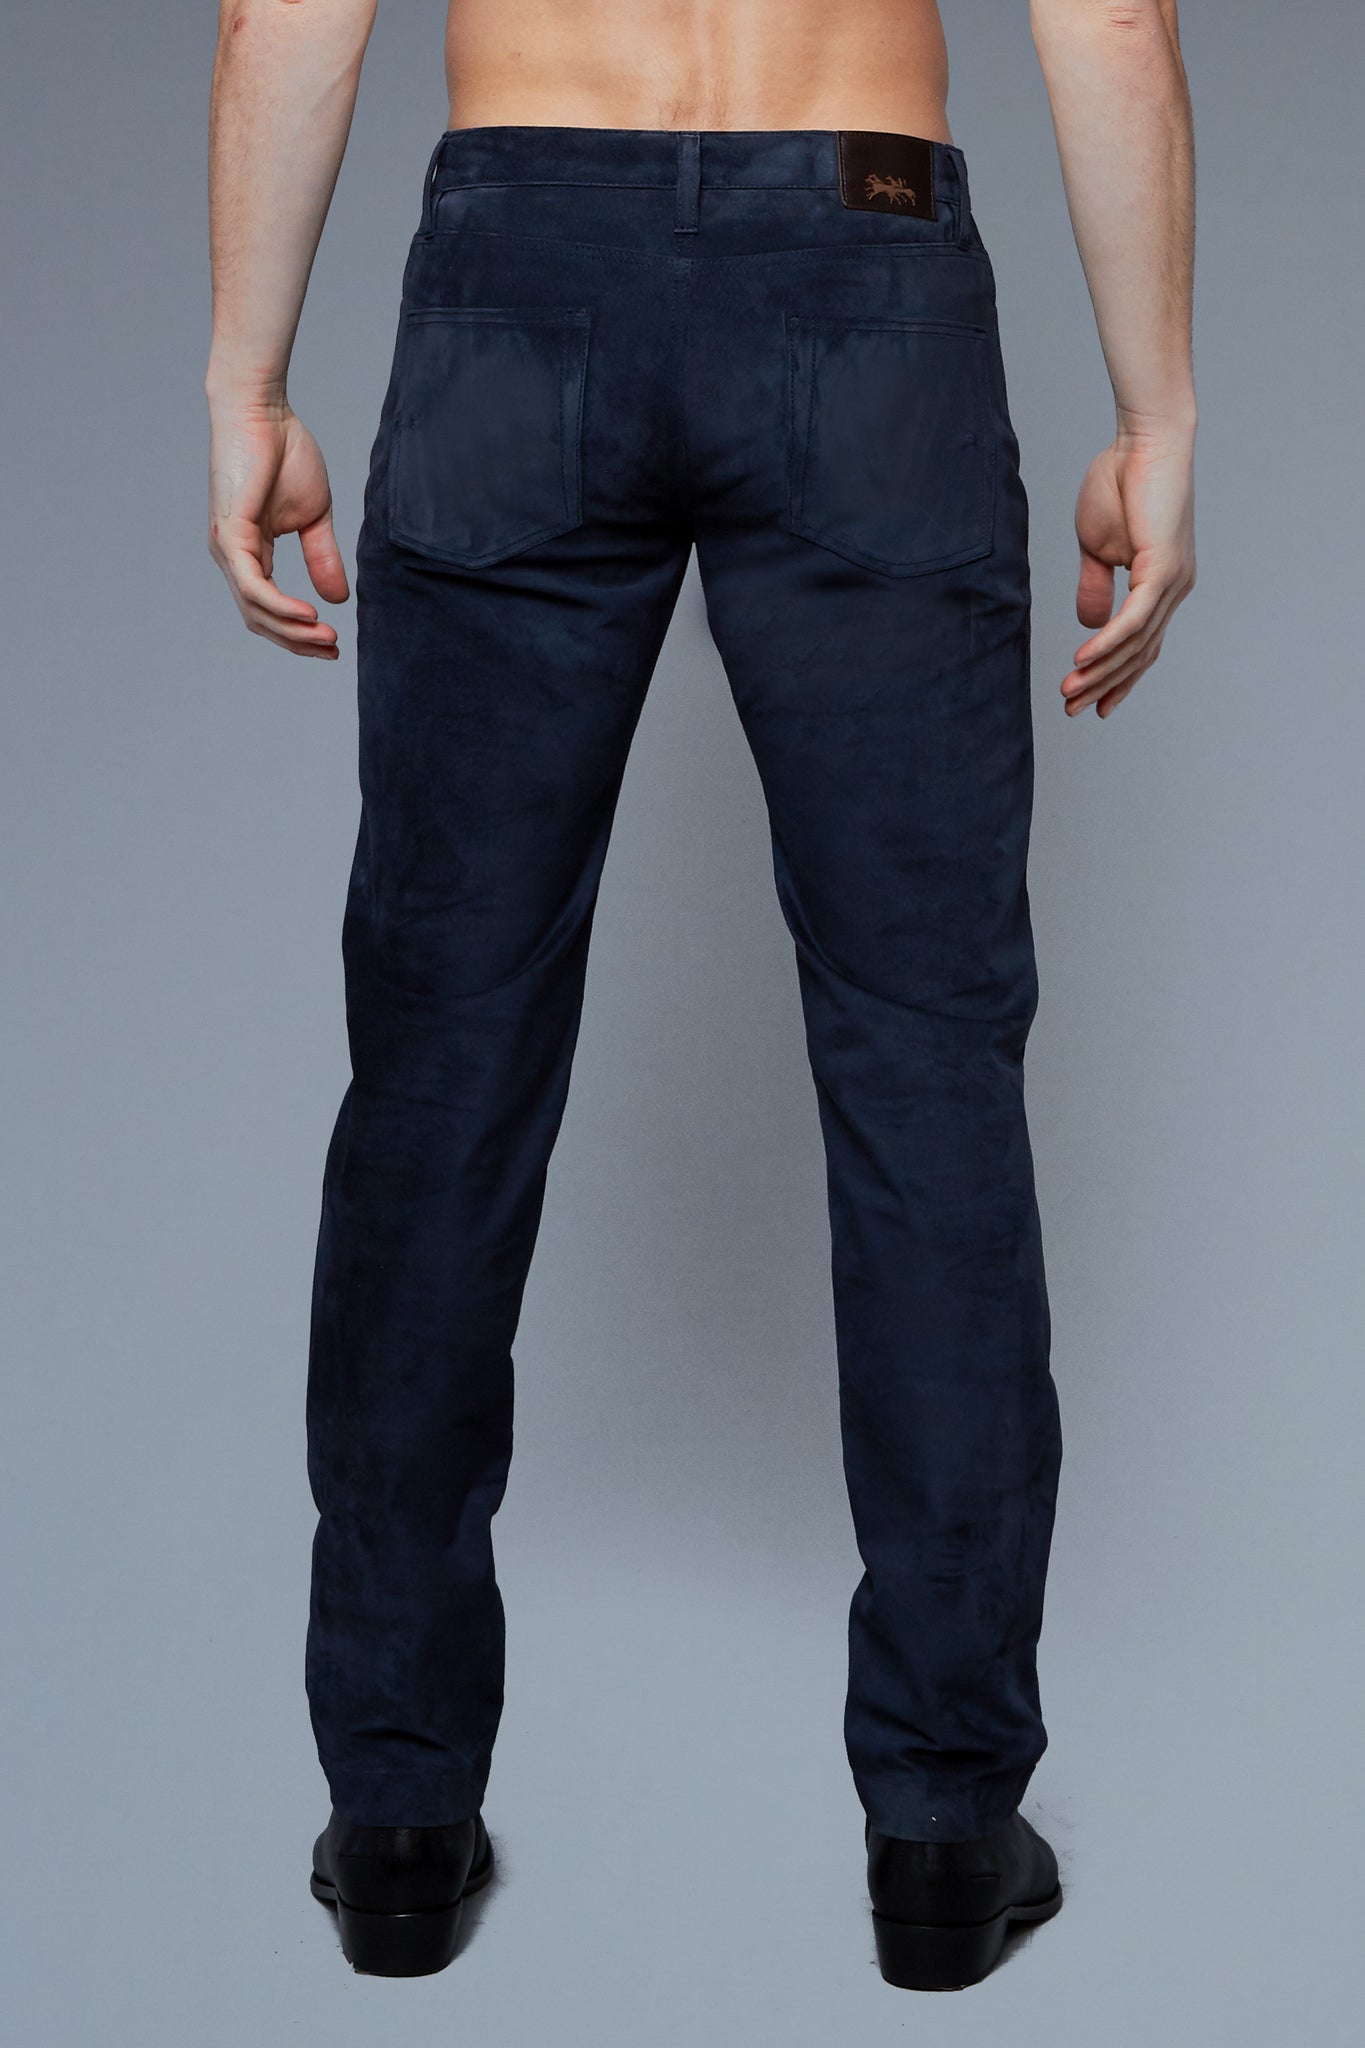 Back View: Model Hans Weiner wearing Suede 5 Pocket Pants